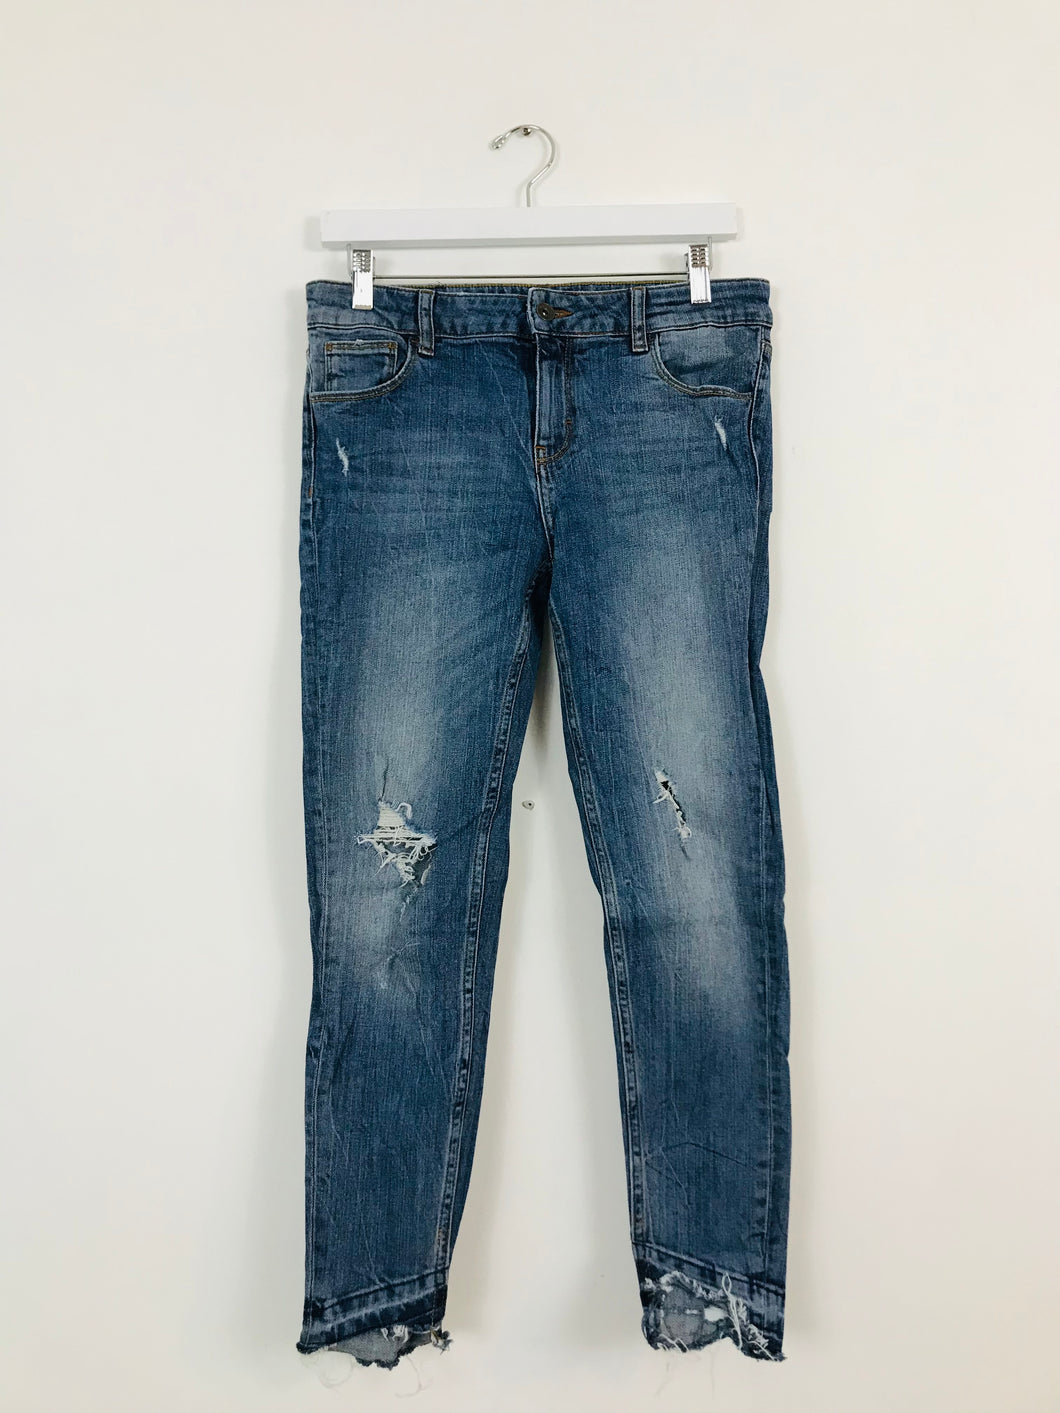 Zara Women’s Distressed Ripped Skinny Jeans | 38 UK10 | Blue